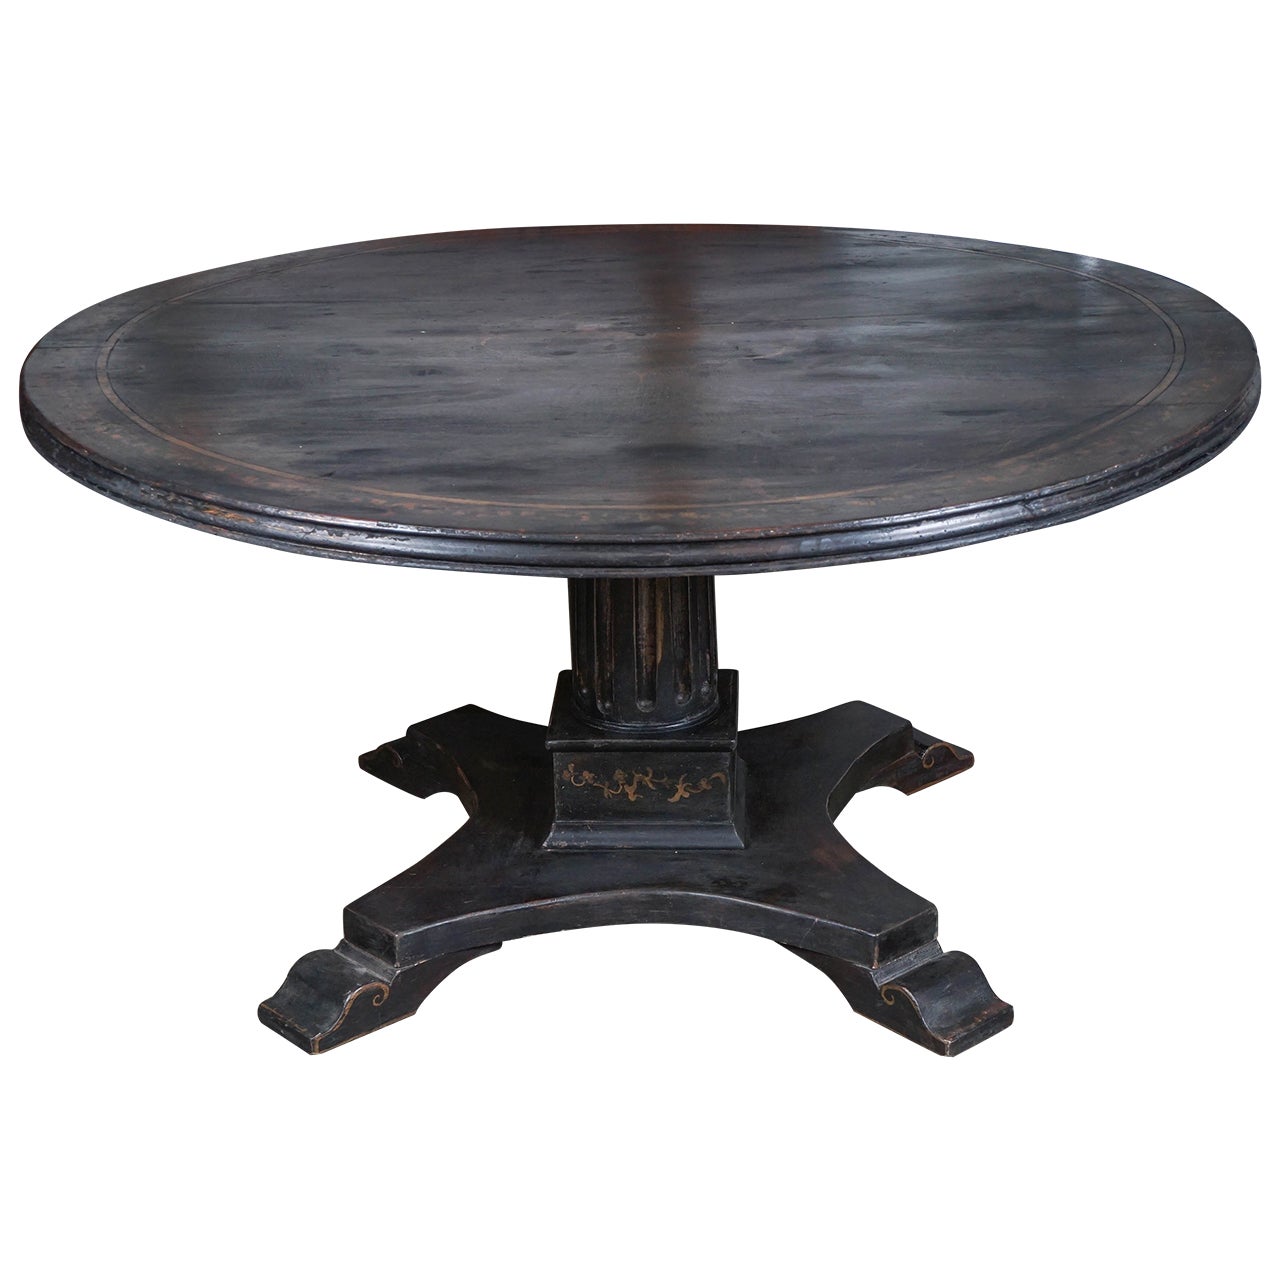 Antique Round Center Pedestal Dining Table